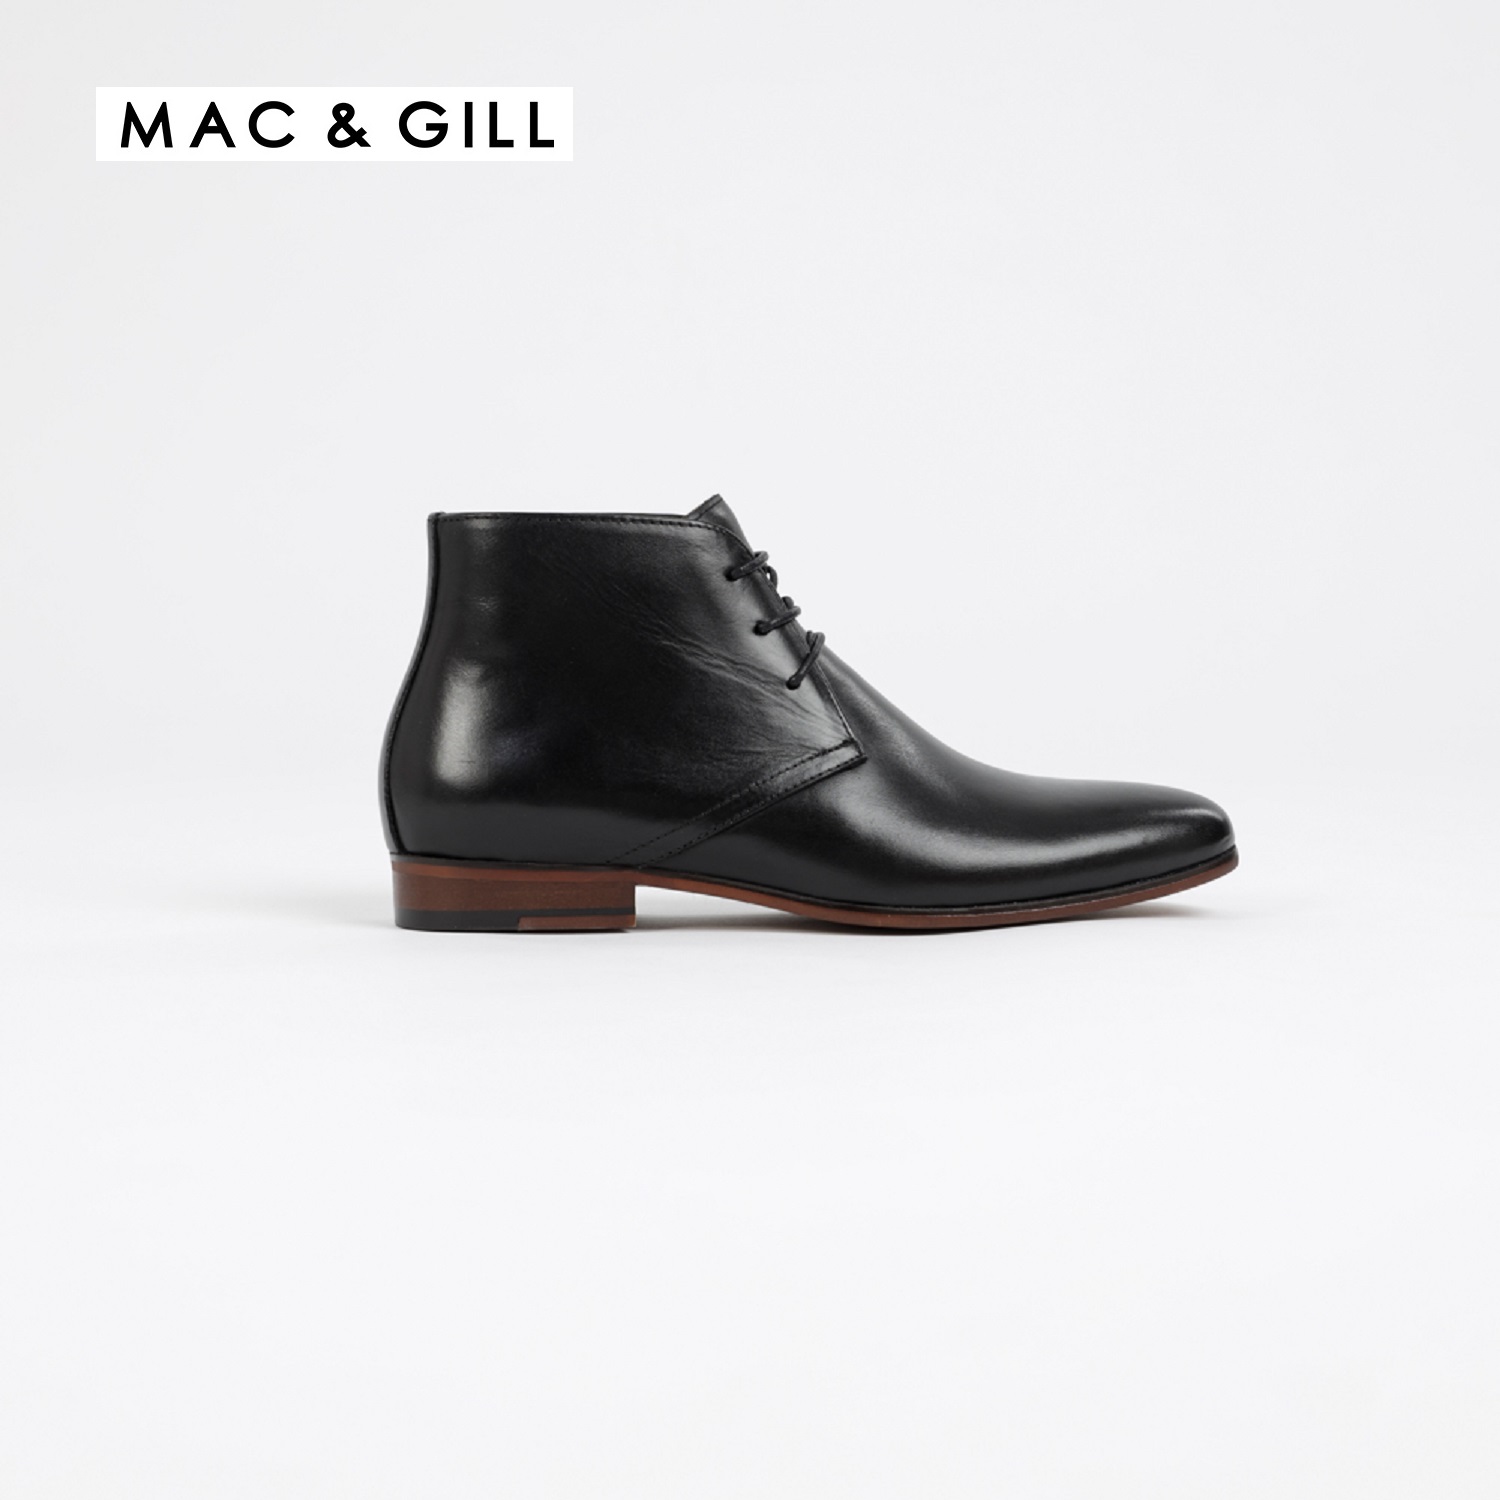 MAC&GILL รองเท้าผู้ชายหนังแท้แบบฮาฟผูกเชือกทางการสึดำ CHUKKA LEATHER ANKLE BOOTS Genuine Leather LACED-on MAC & GILL FORMAL WEAR